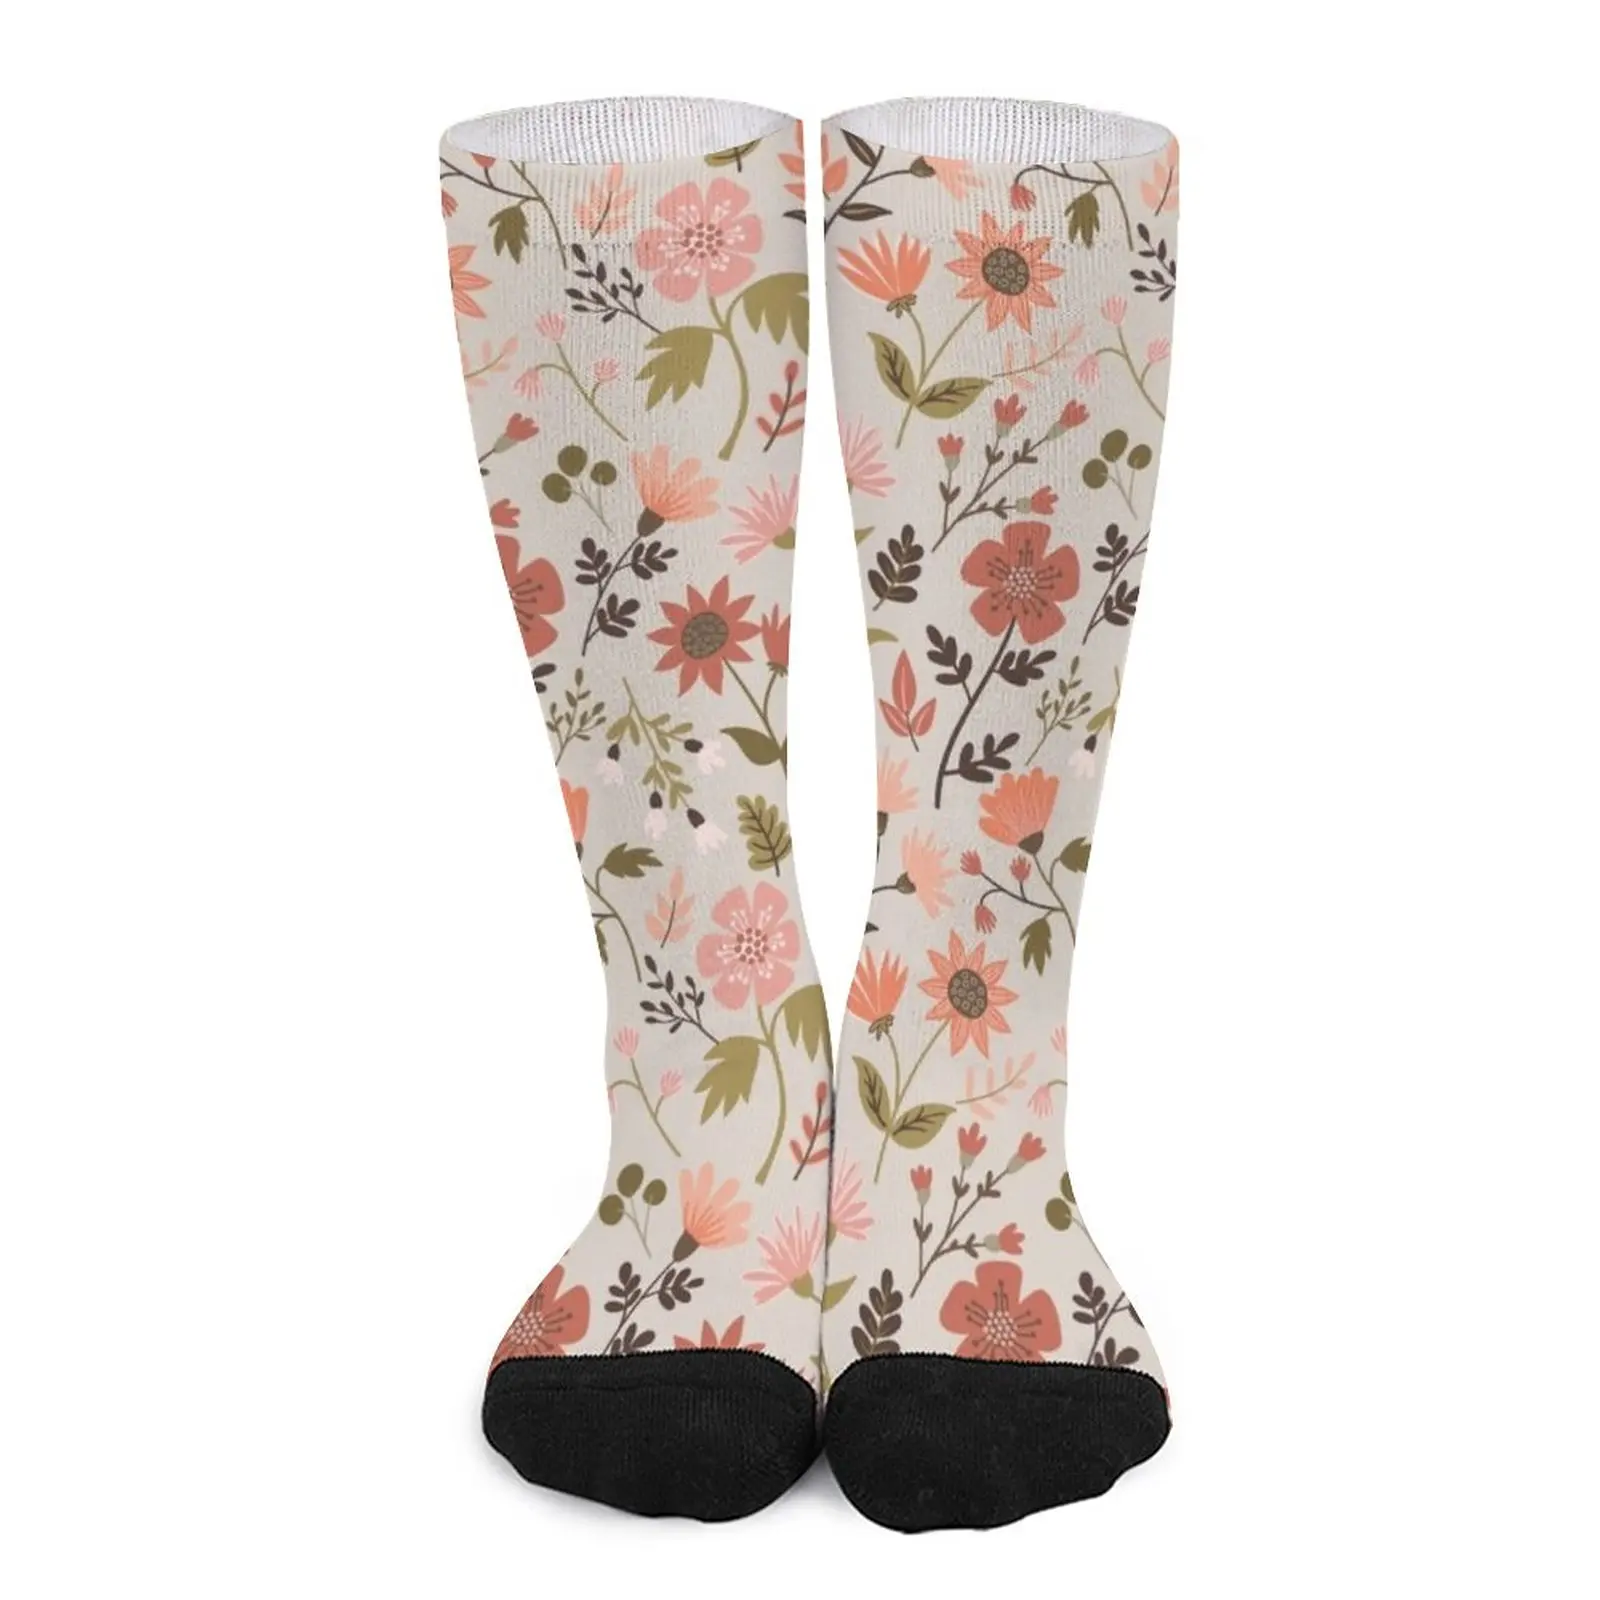 Fall Foliage Floral and Leaf Print Shades of Pink & Green Socks Funny socks woman Novelties socks for men Funny socks